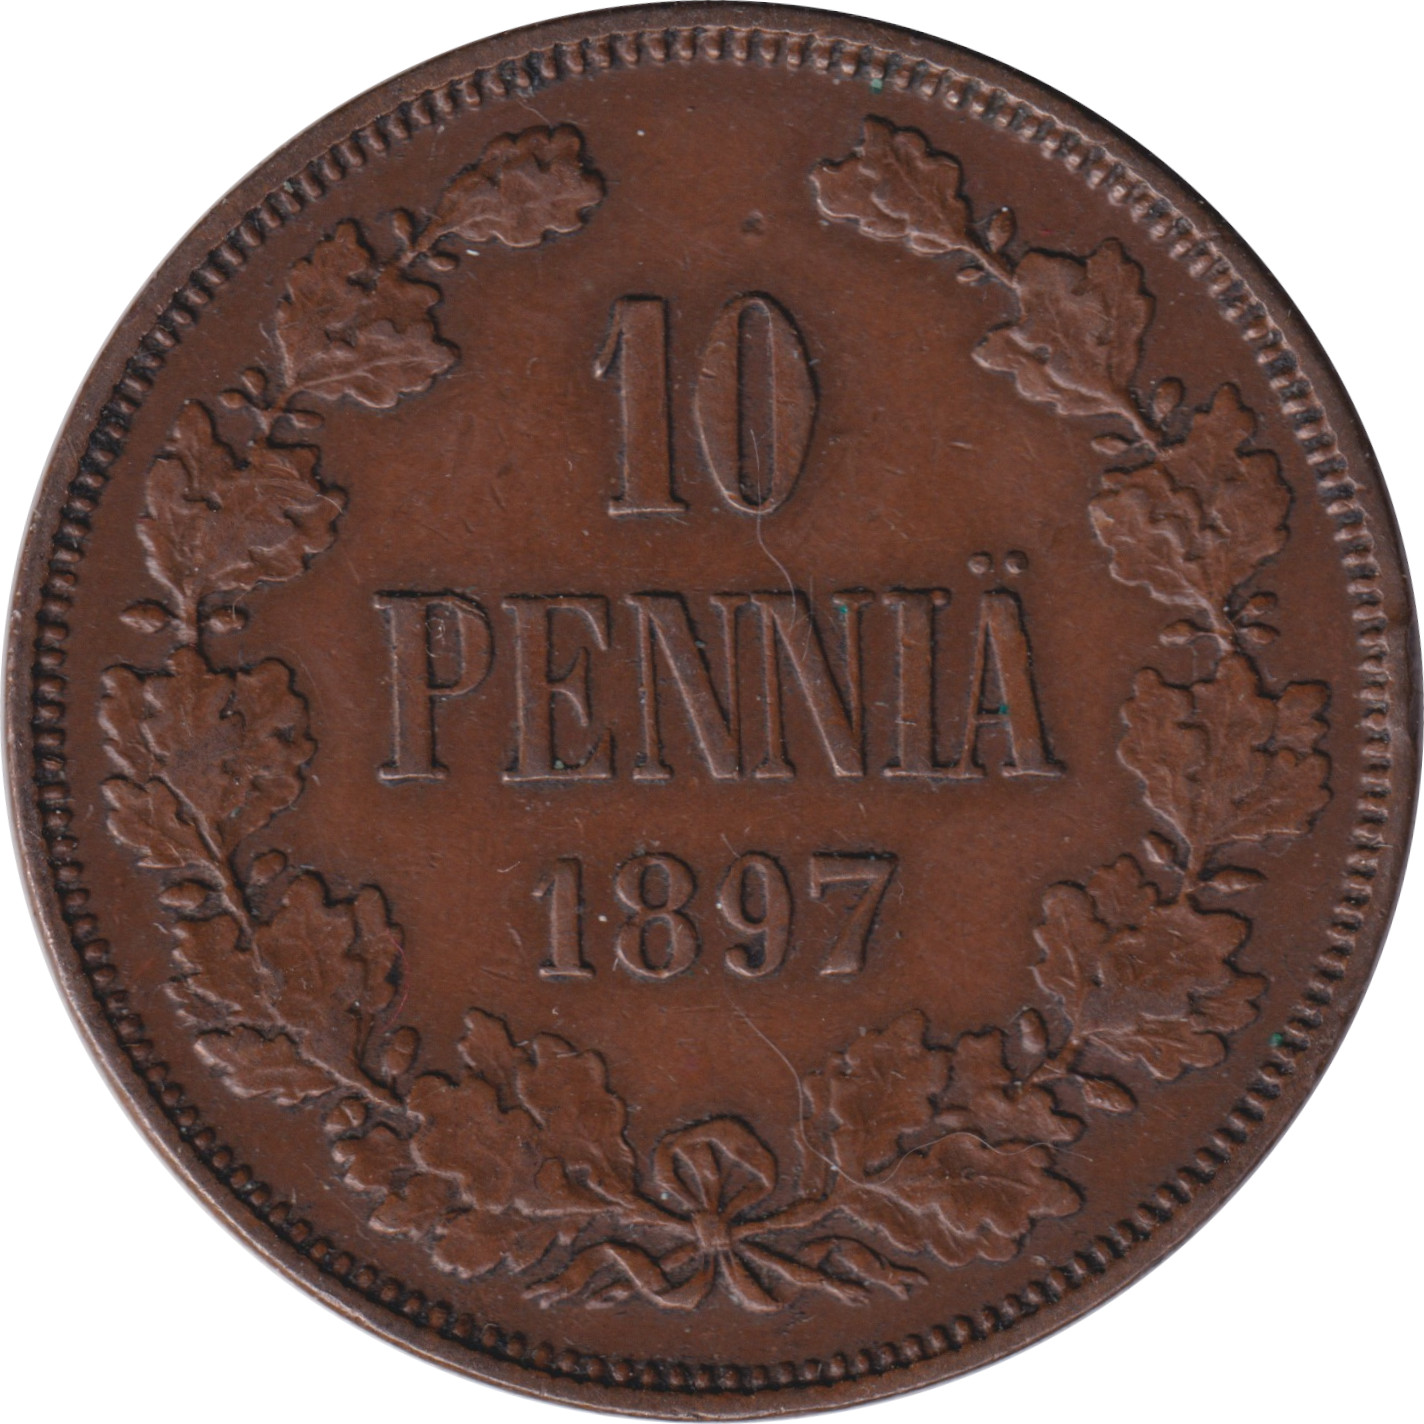 10 pennia - Nicolas II - Monogramme N II